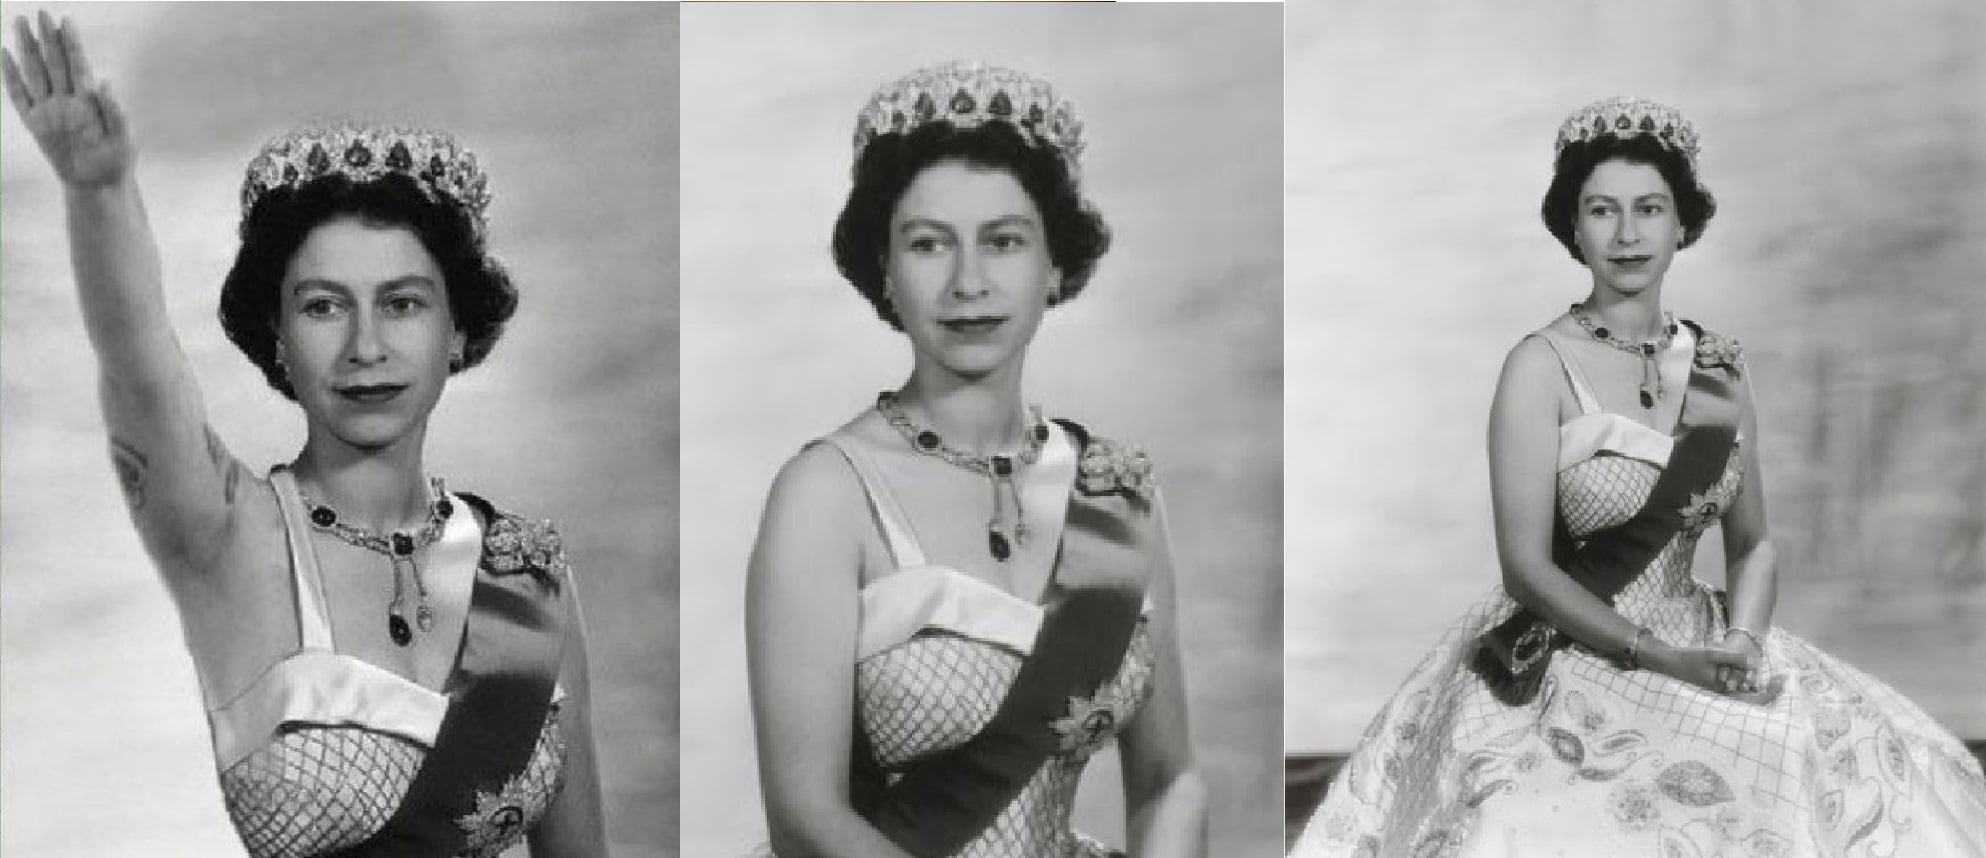 Elizabeth II Photomontage Comparison